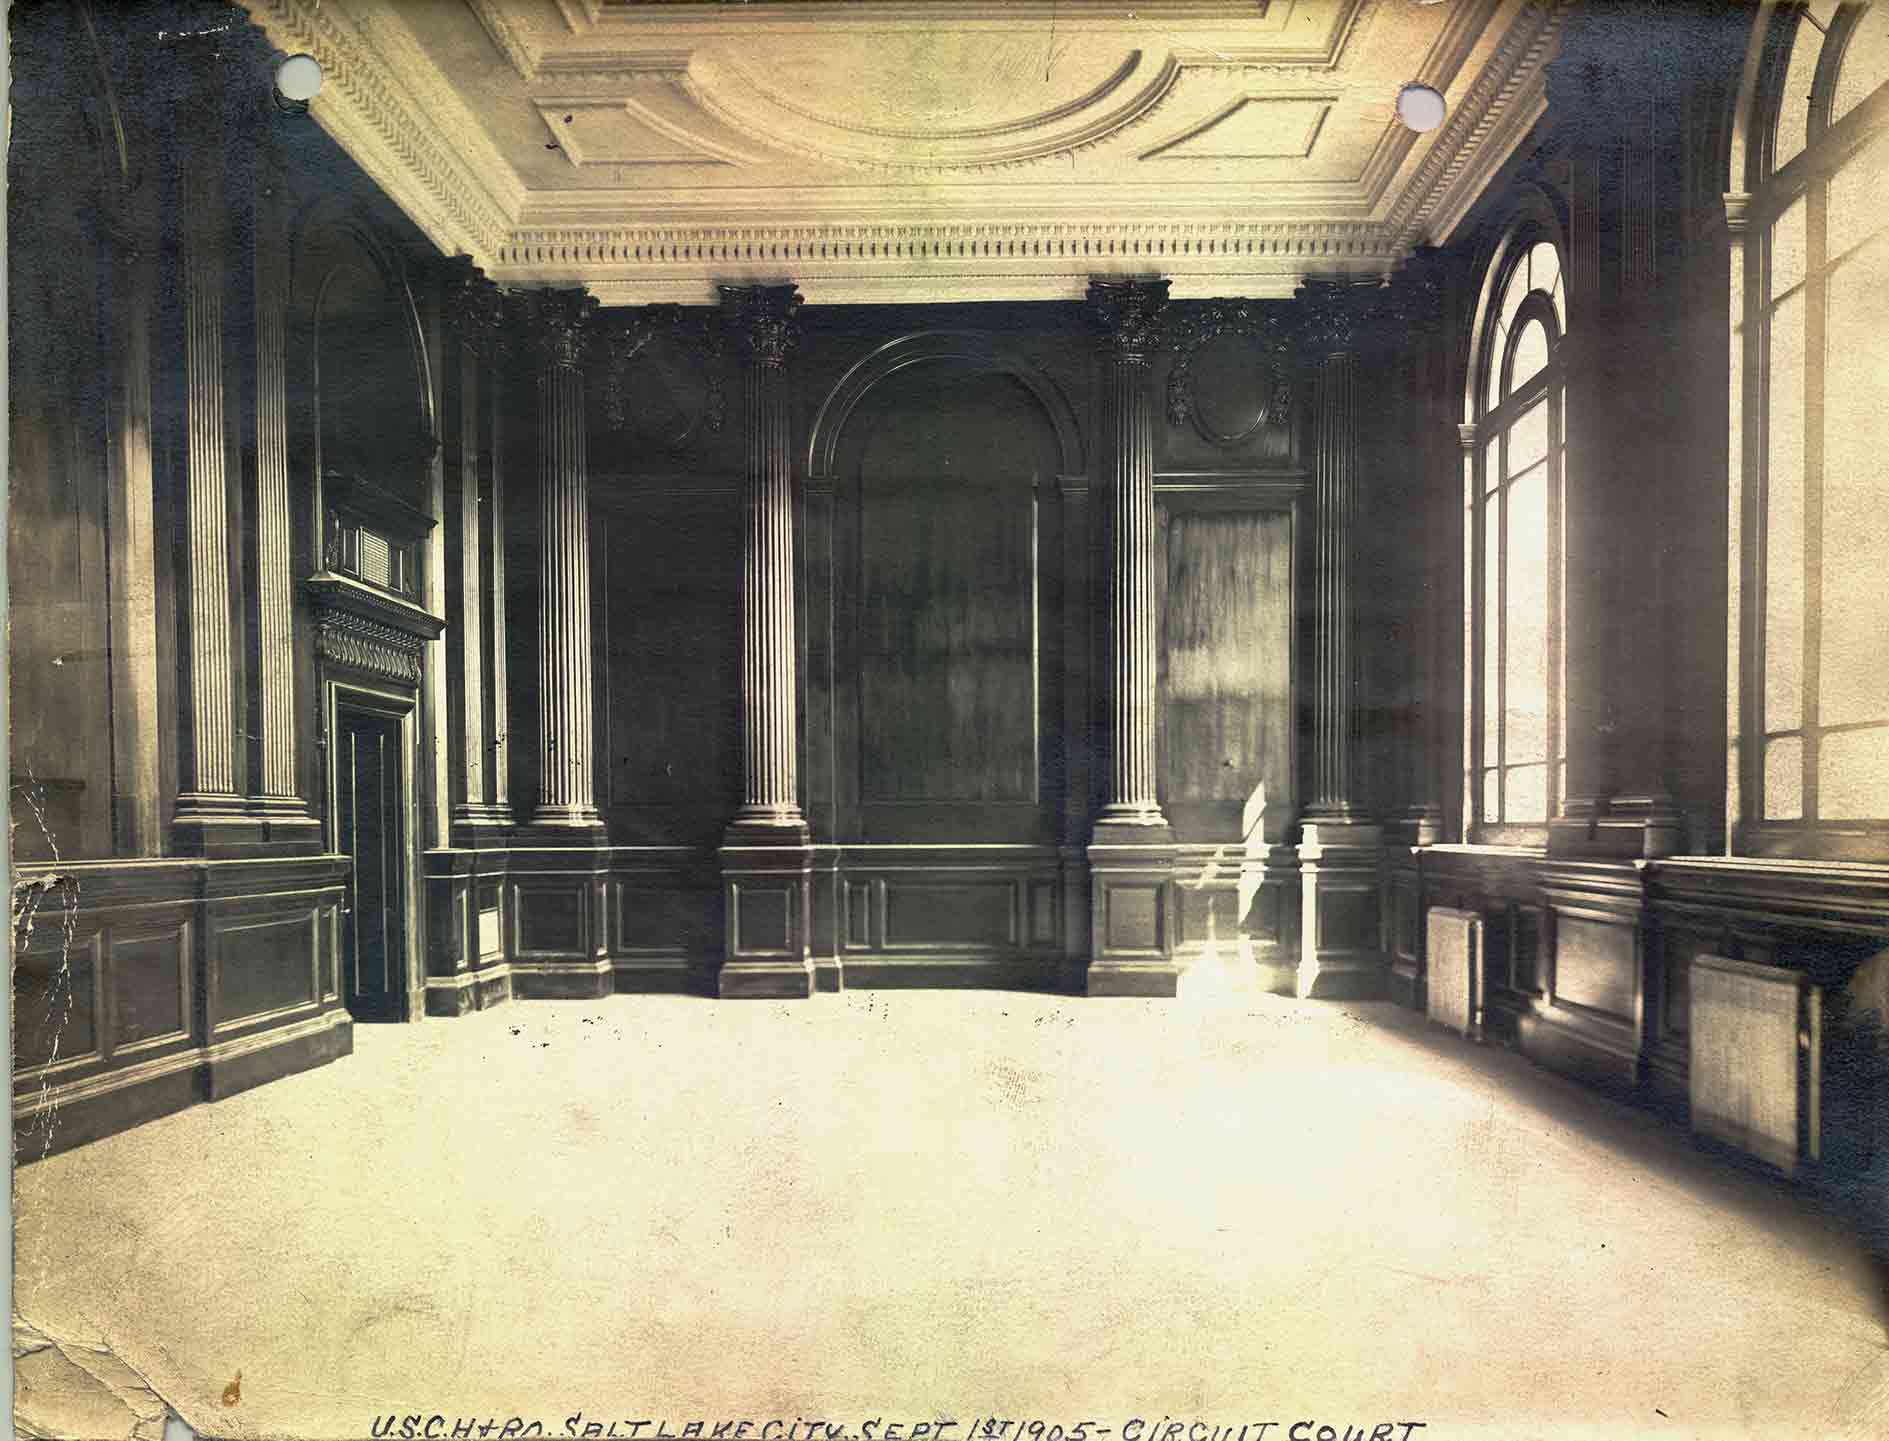 1905 September 1 Circuit Court interior of Frank E. Moss U.S. Courthouse Building